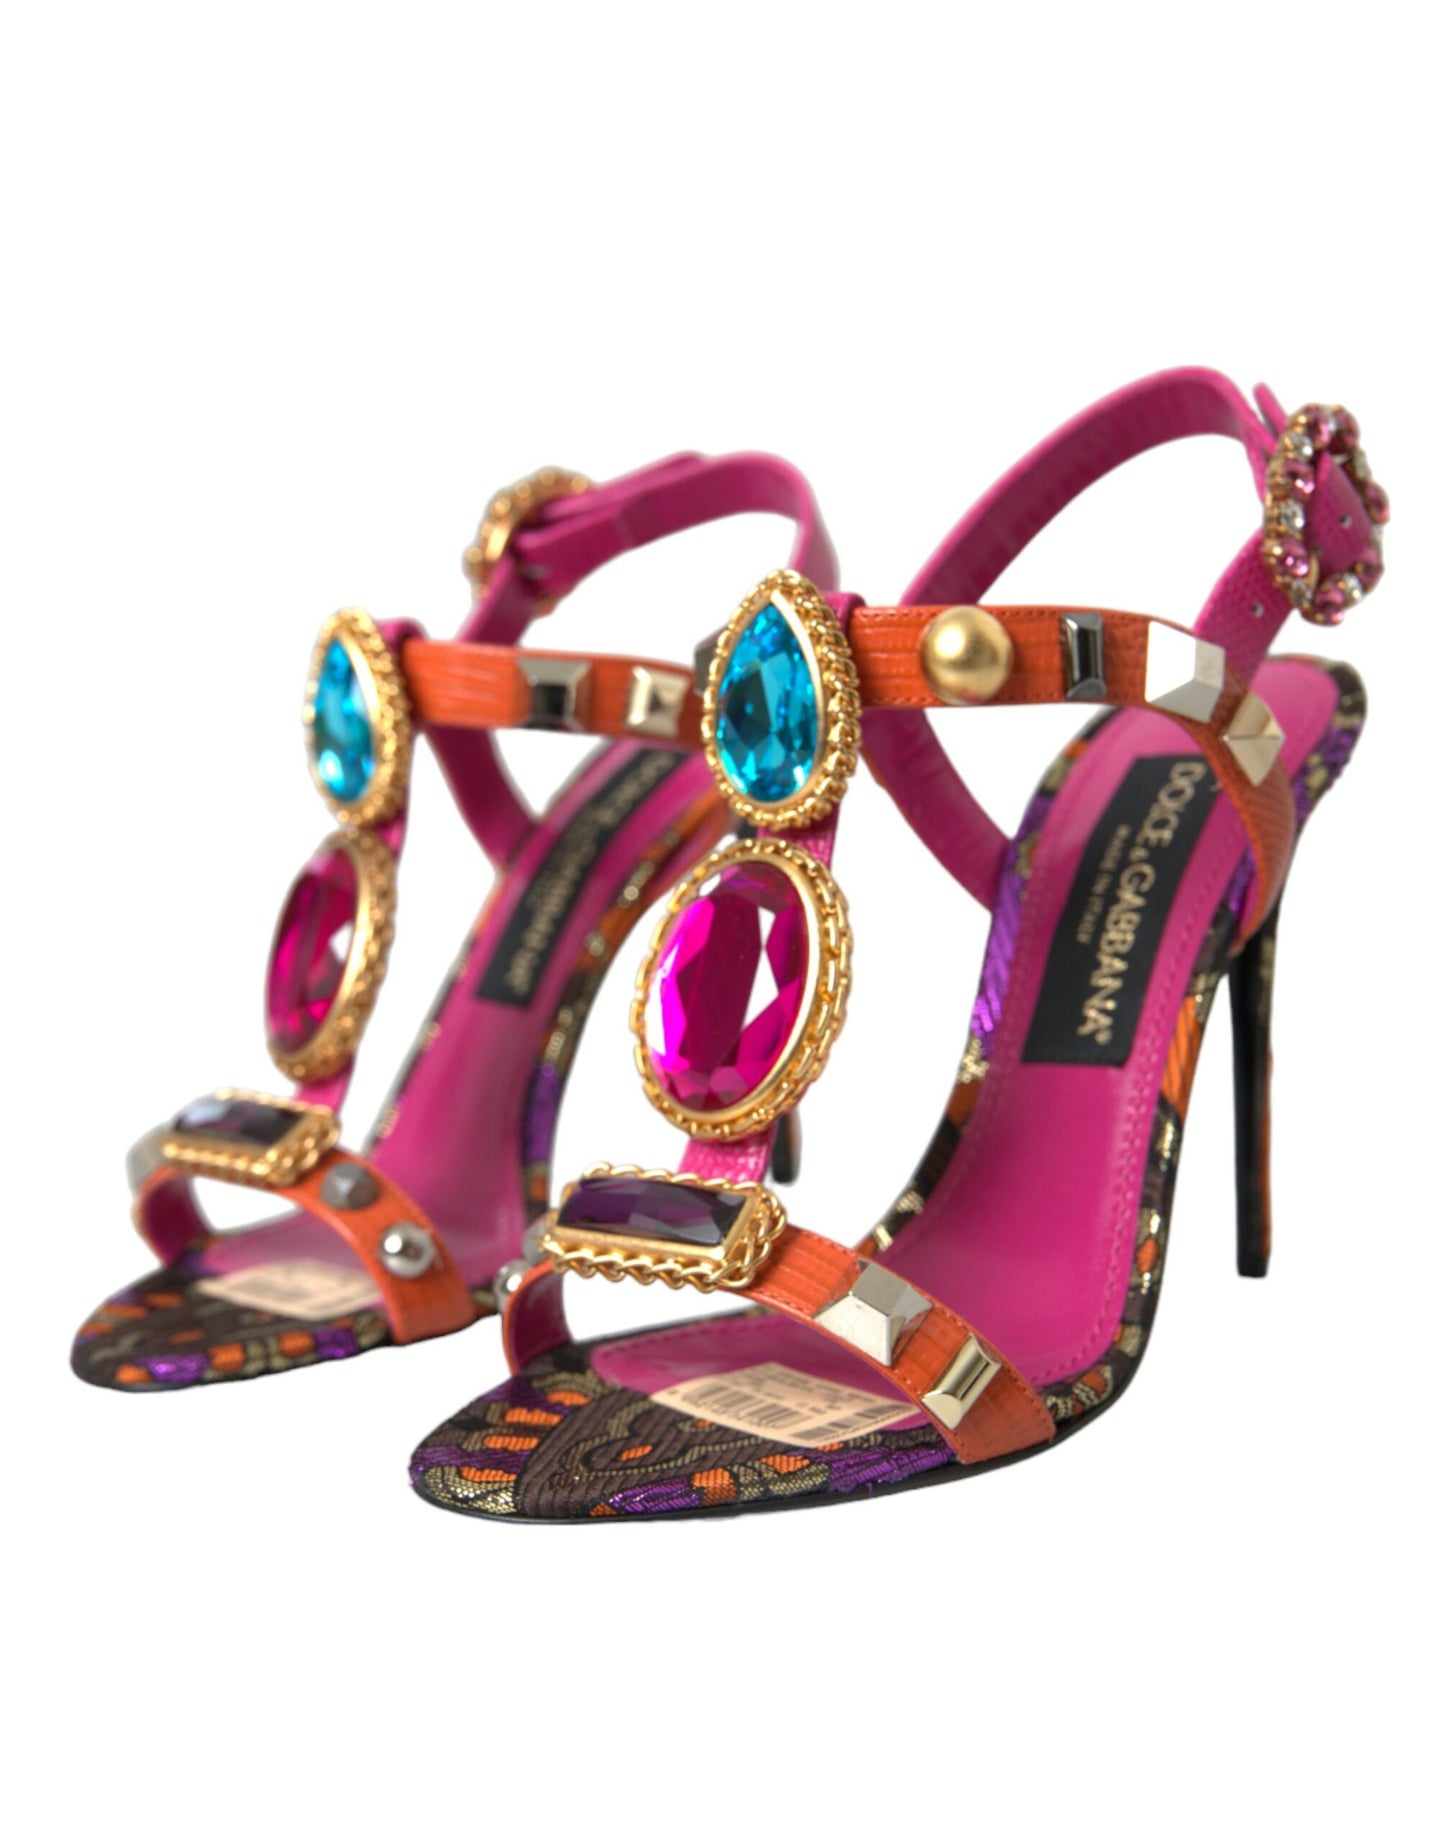 Dolce & Gabbana Pink Jacquard Crystals Sandals Heels Shoes